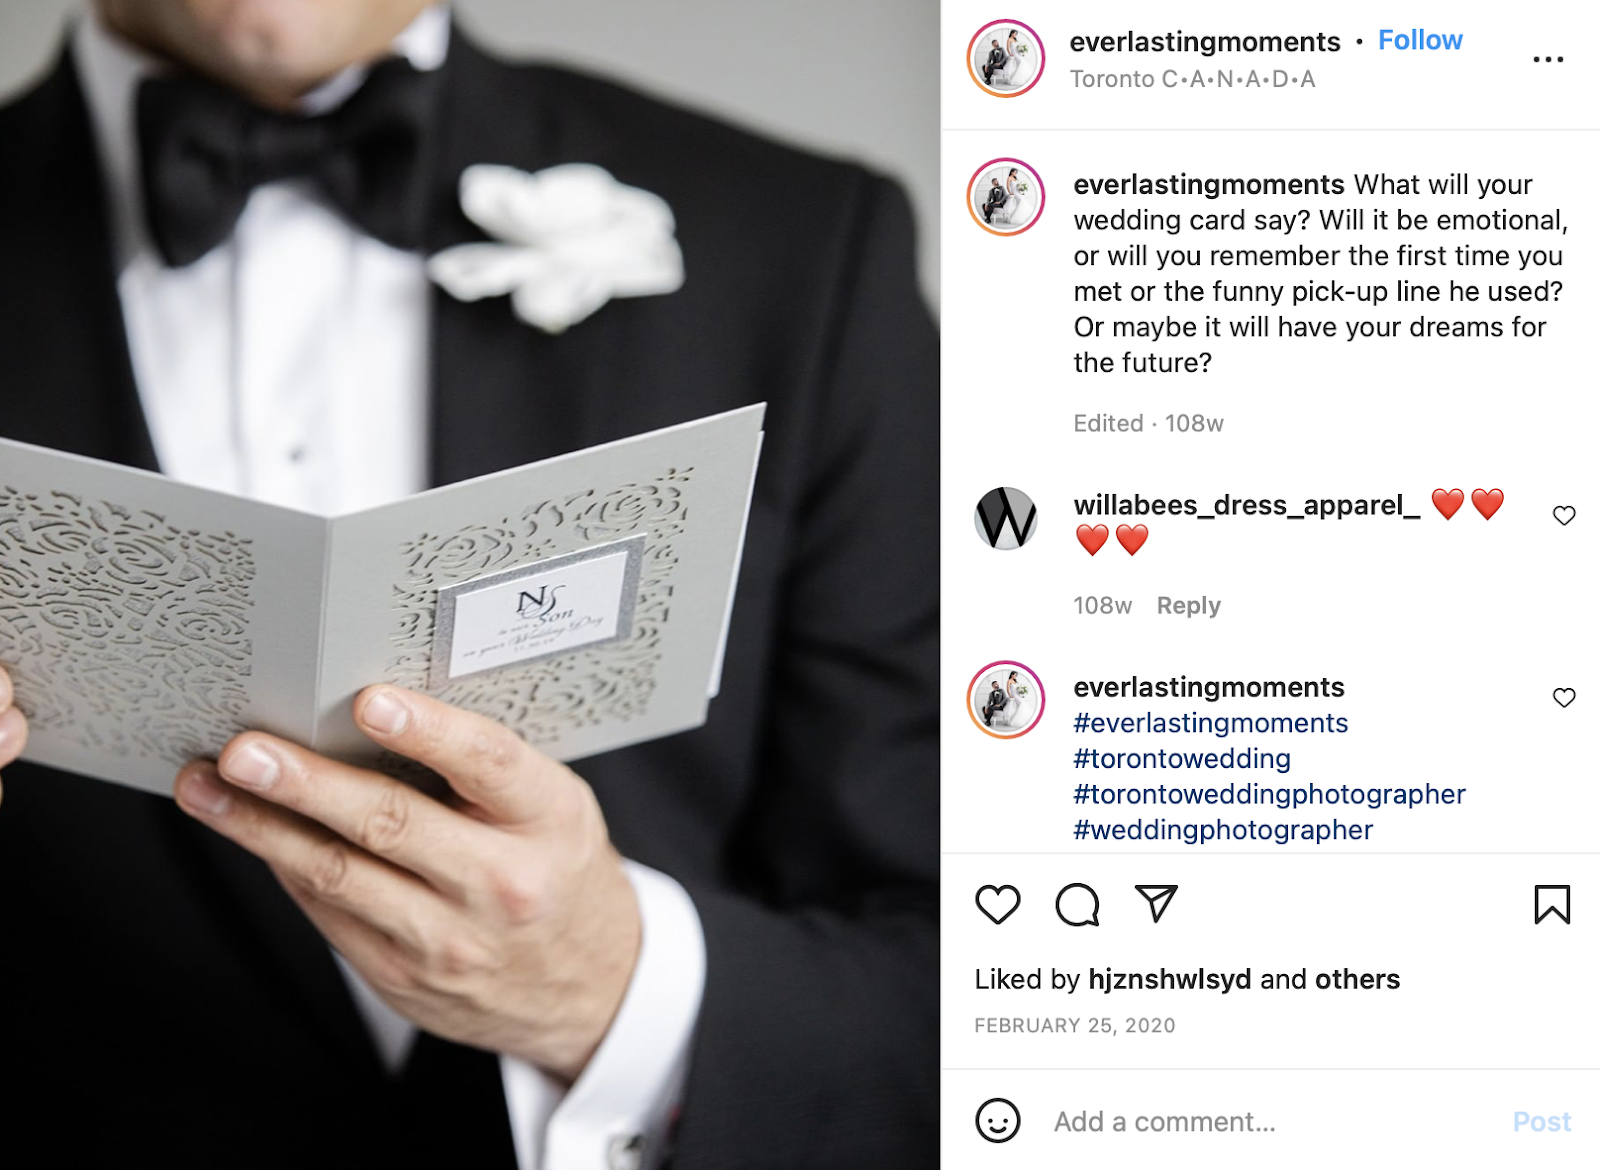 everlasting moments Instagram post on wedding cards 